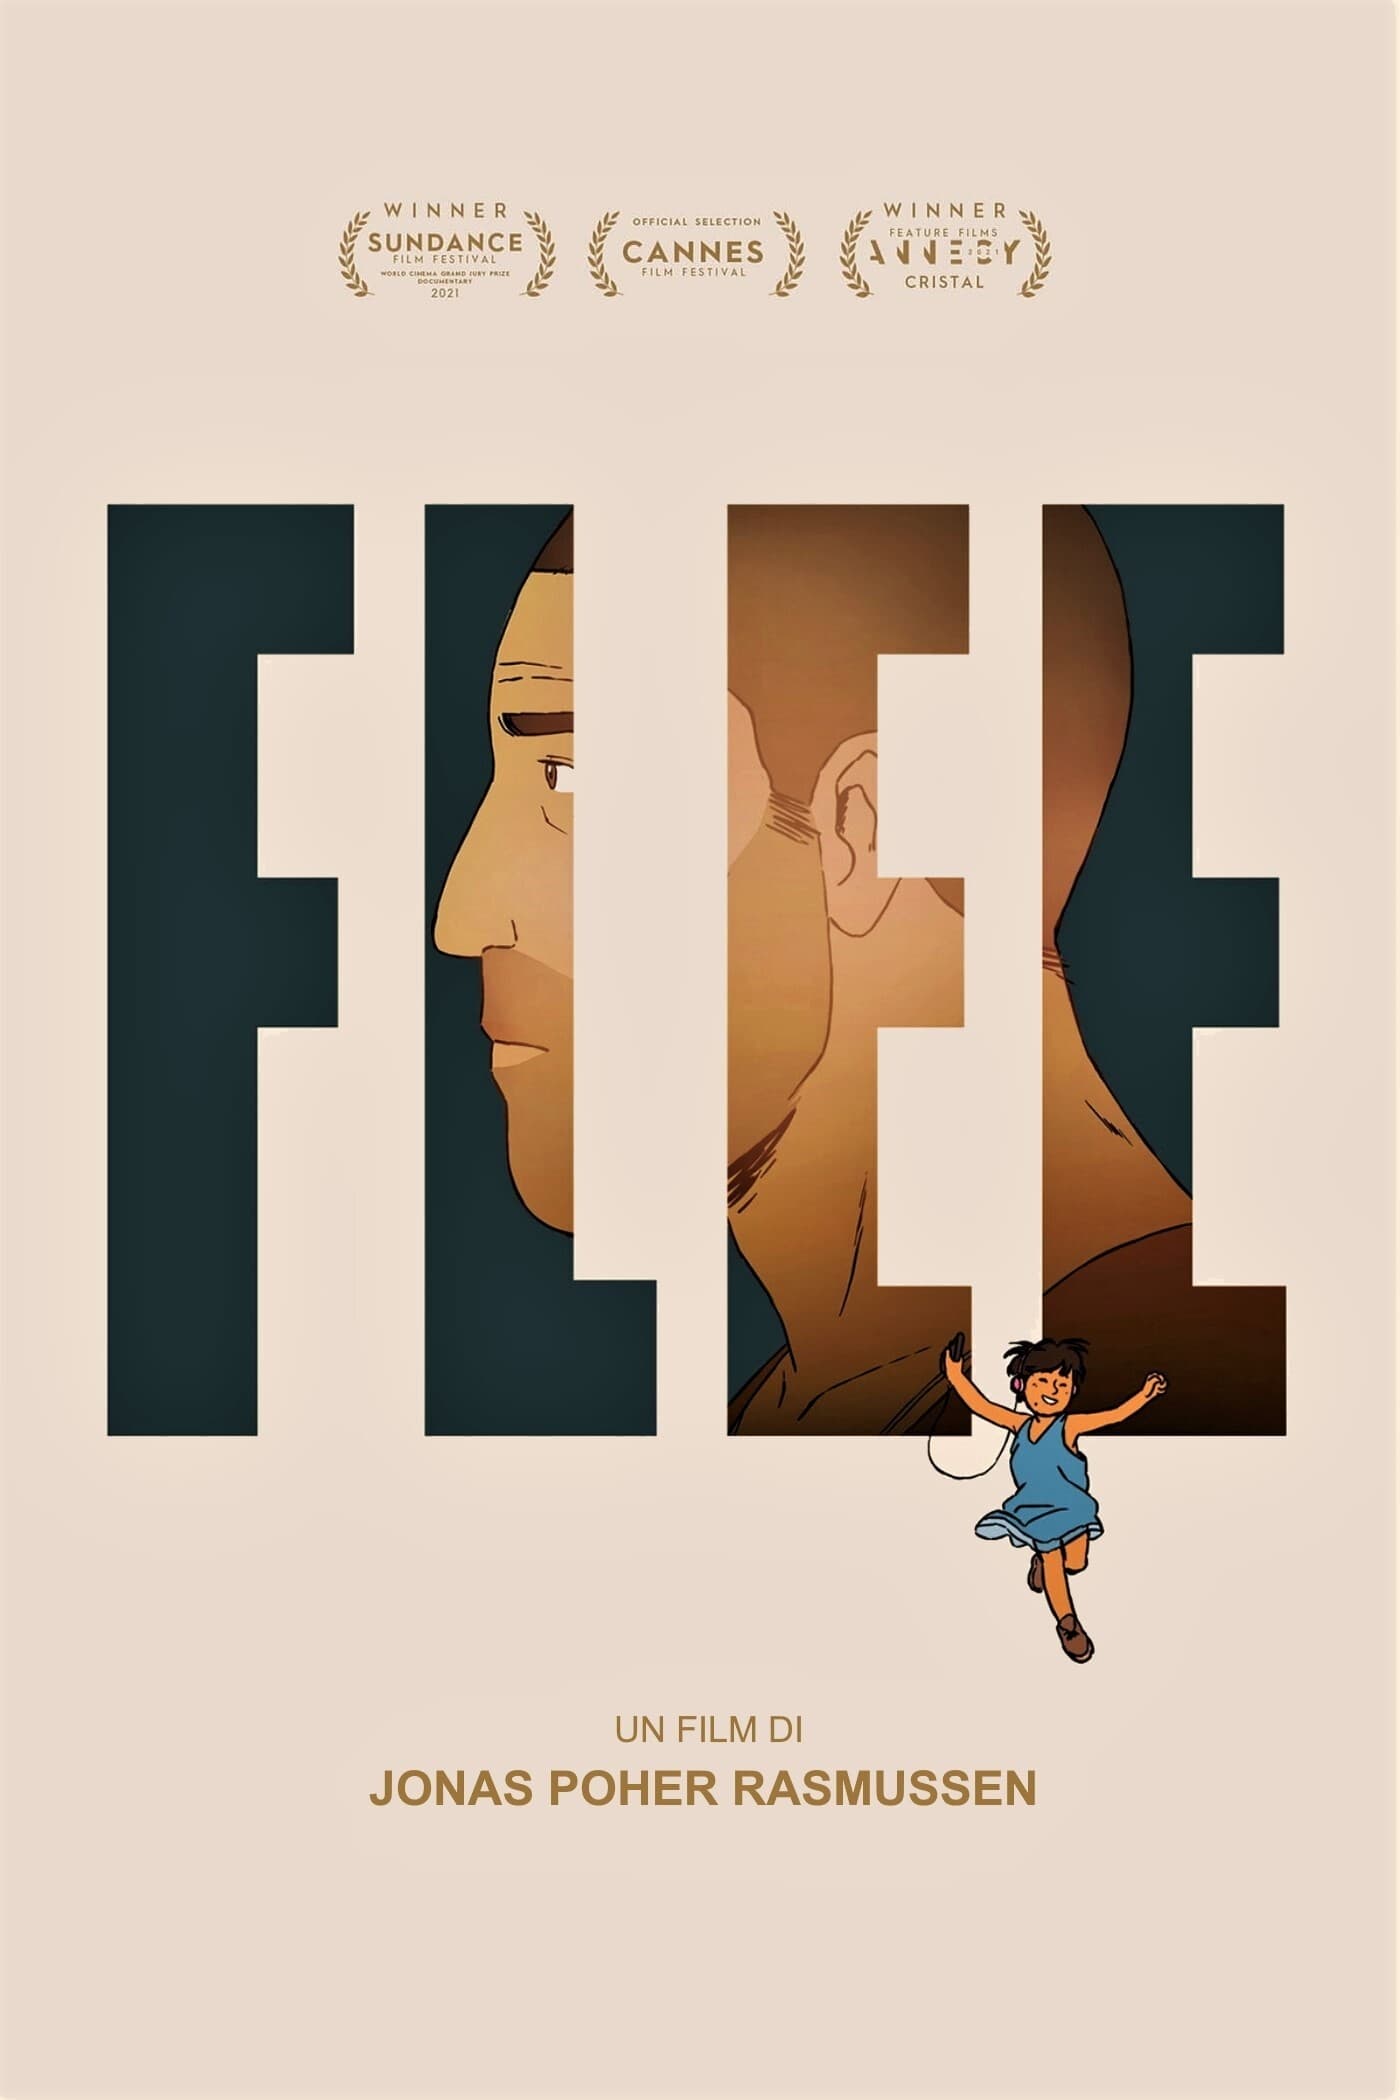 Locandina del Film "Flee"